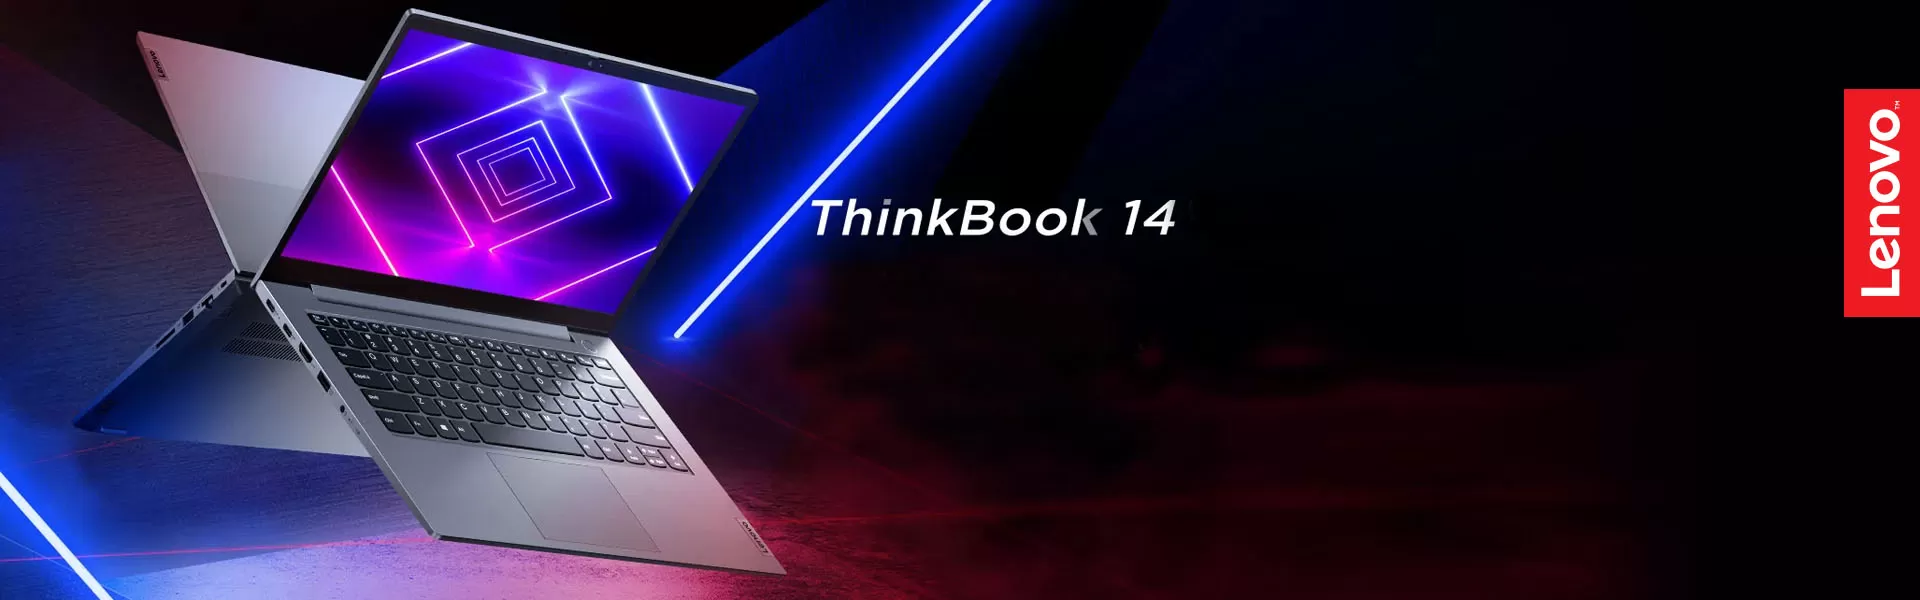 Lenovo Thinkbook 14 Offer